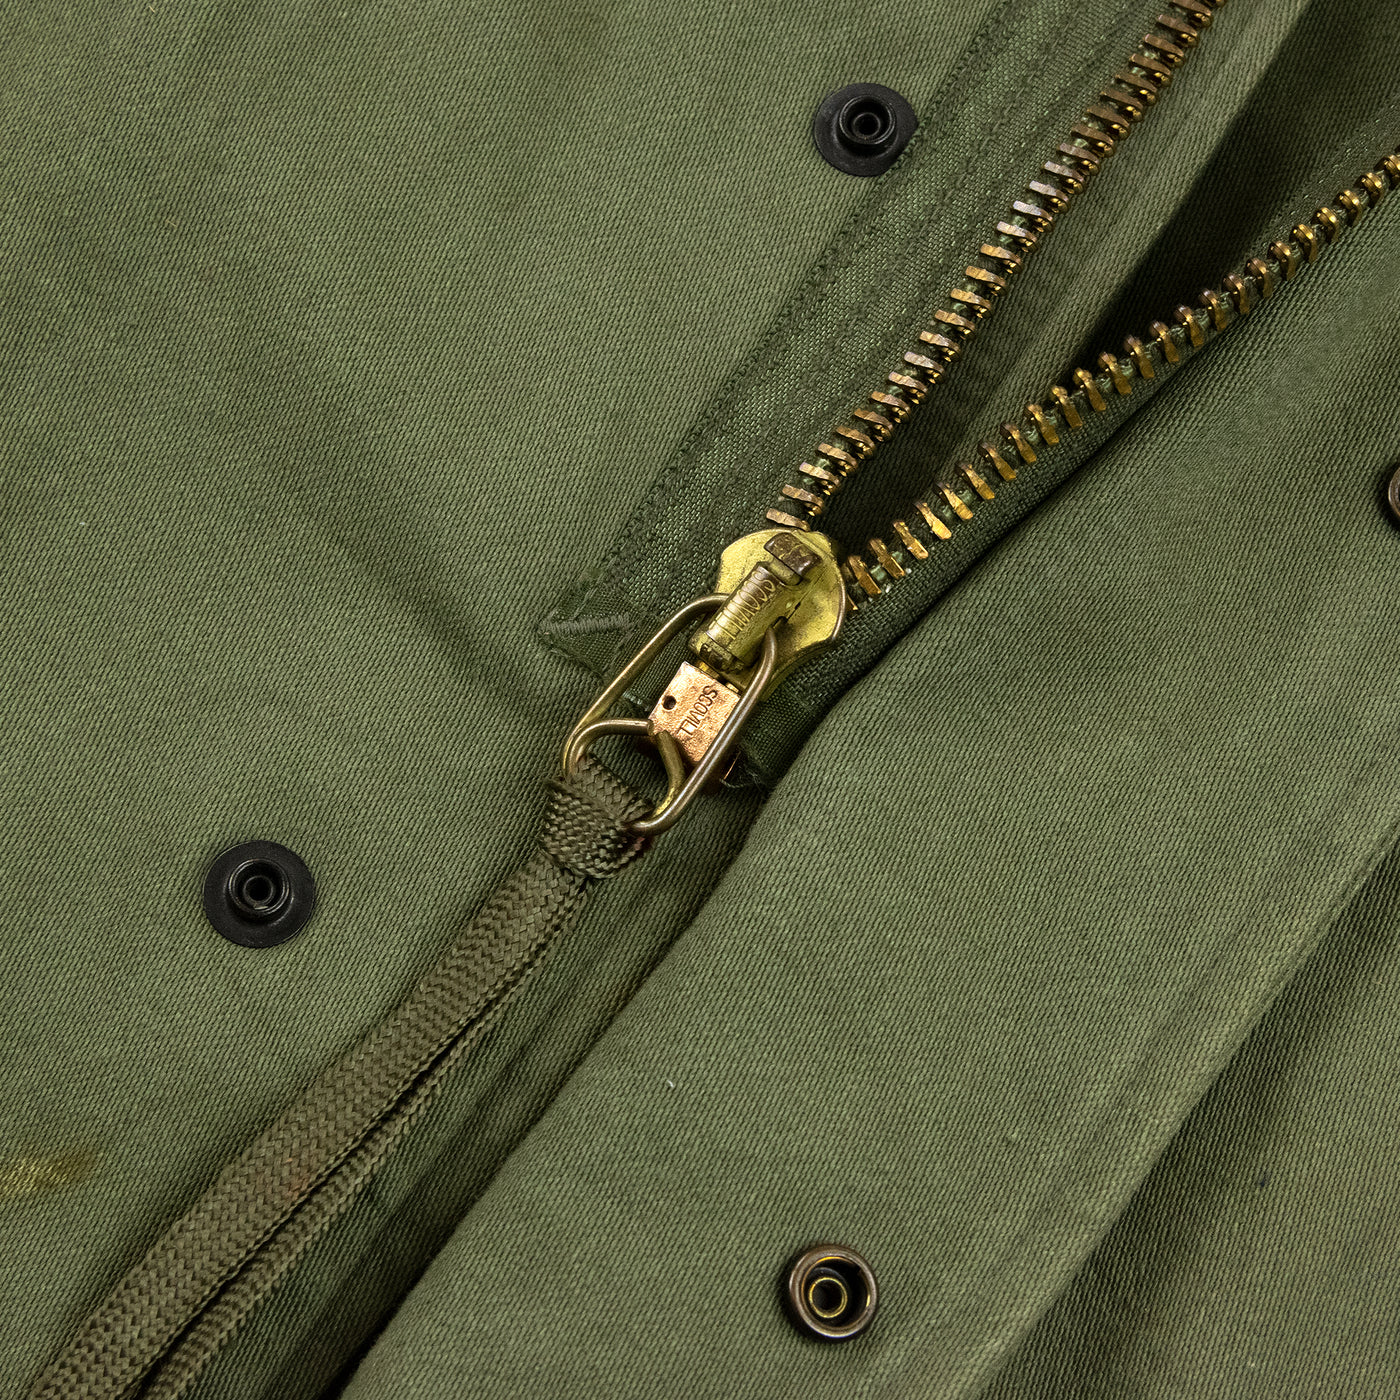 Vintage USMC Vietnam Era M-65 Cotton Sateen Field Jacket 0G-107 Green - M Zip